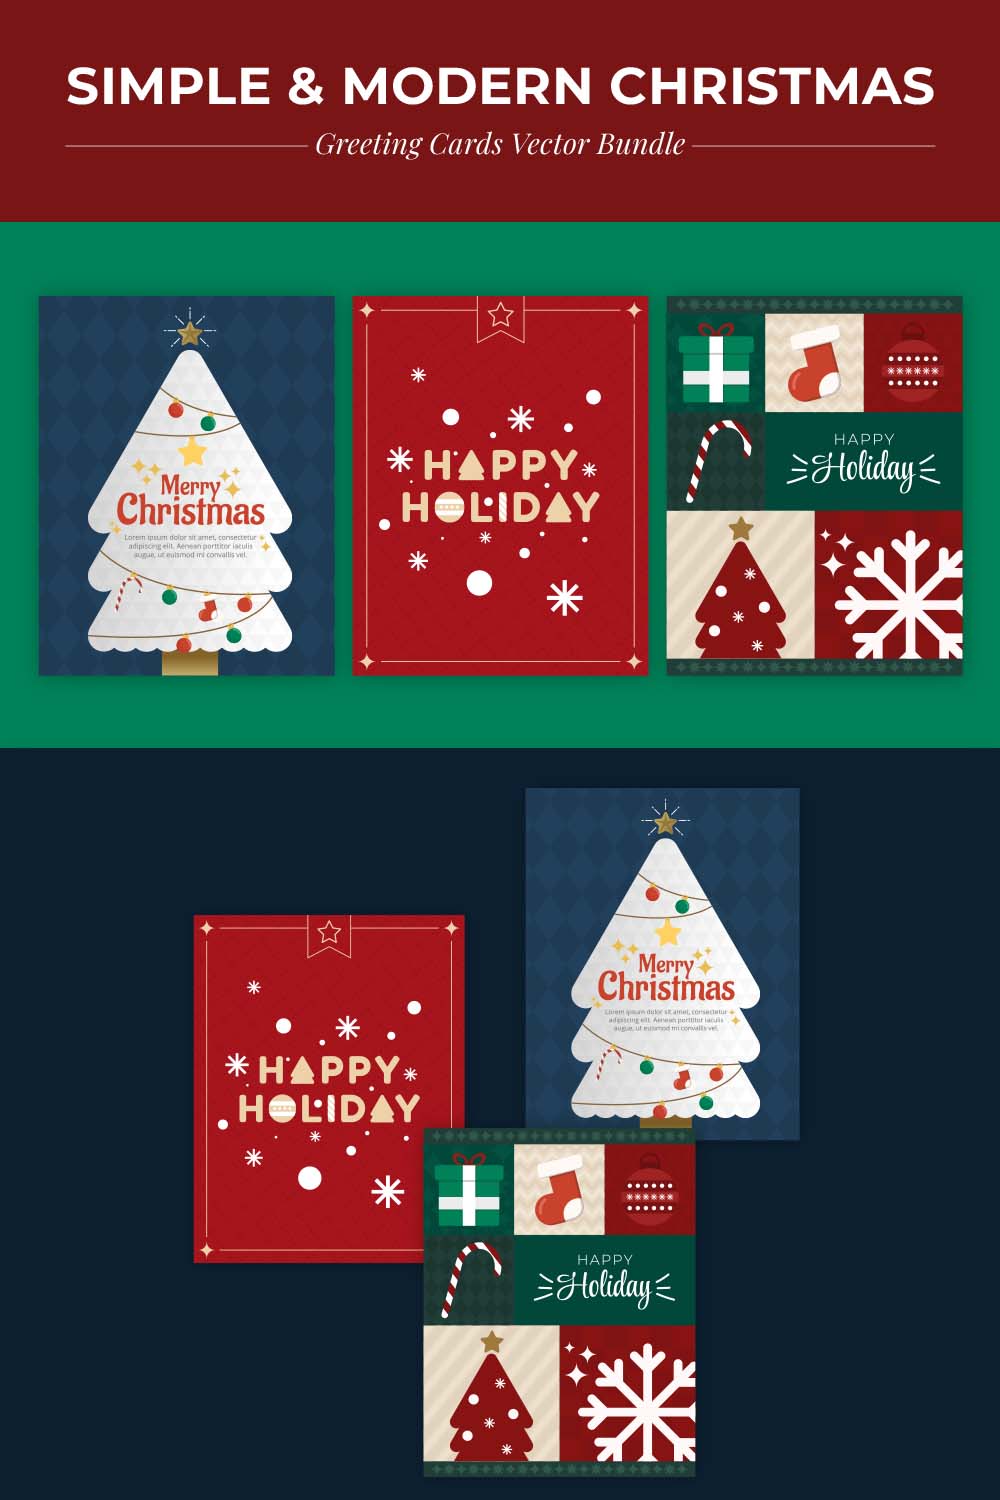 Simple Modern Christmas Greeting Cards Vector Design pinterest image.